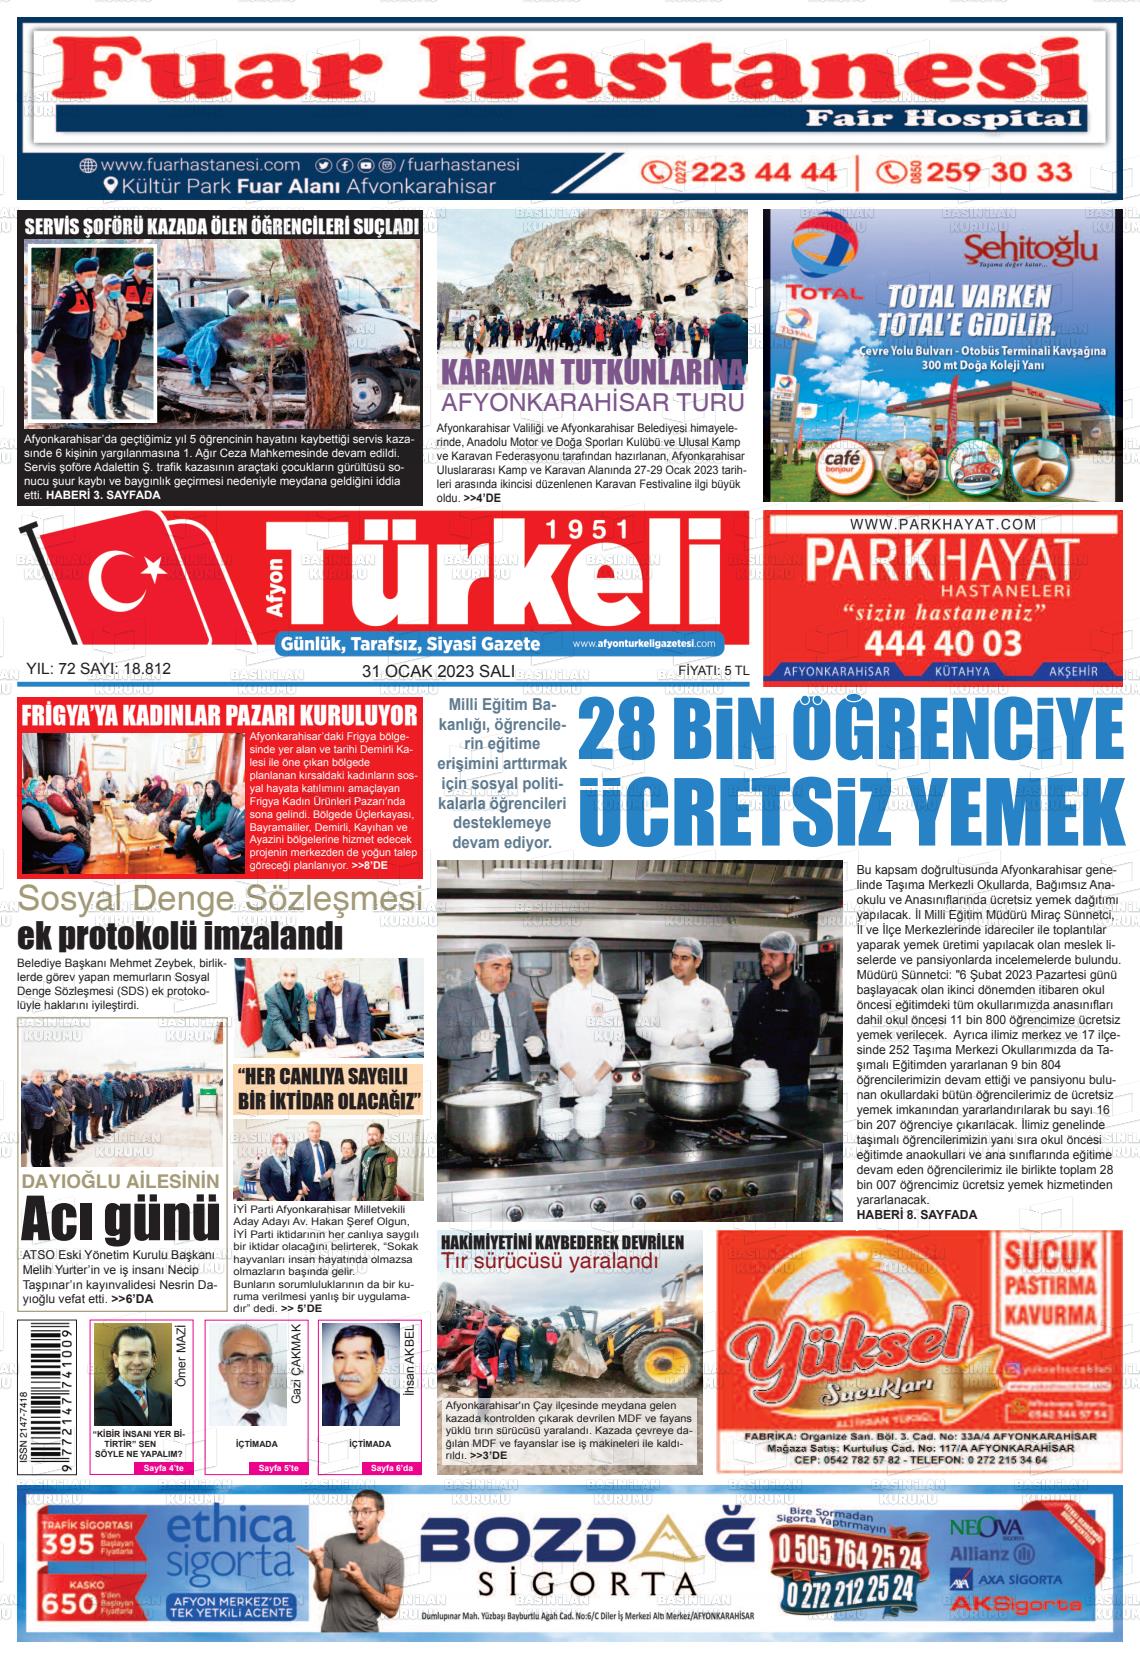 31 Ocak 2023 Afyon Türkeli Gazete Manşeti